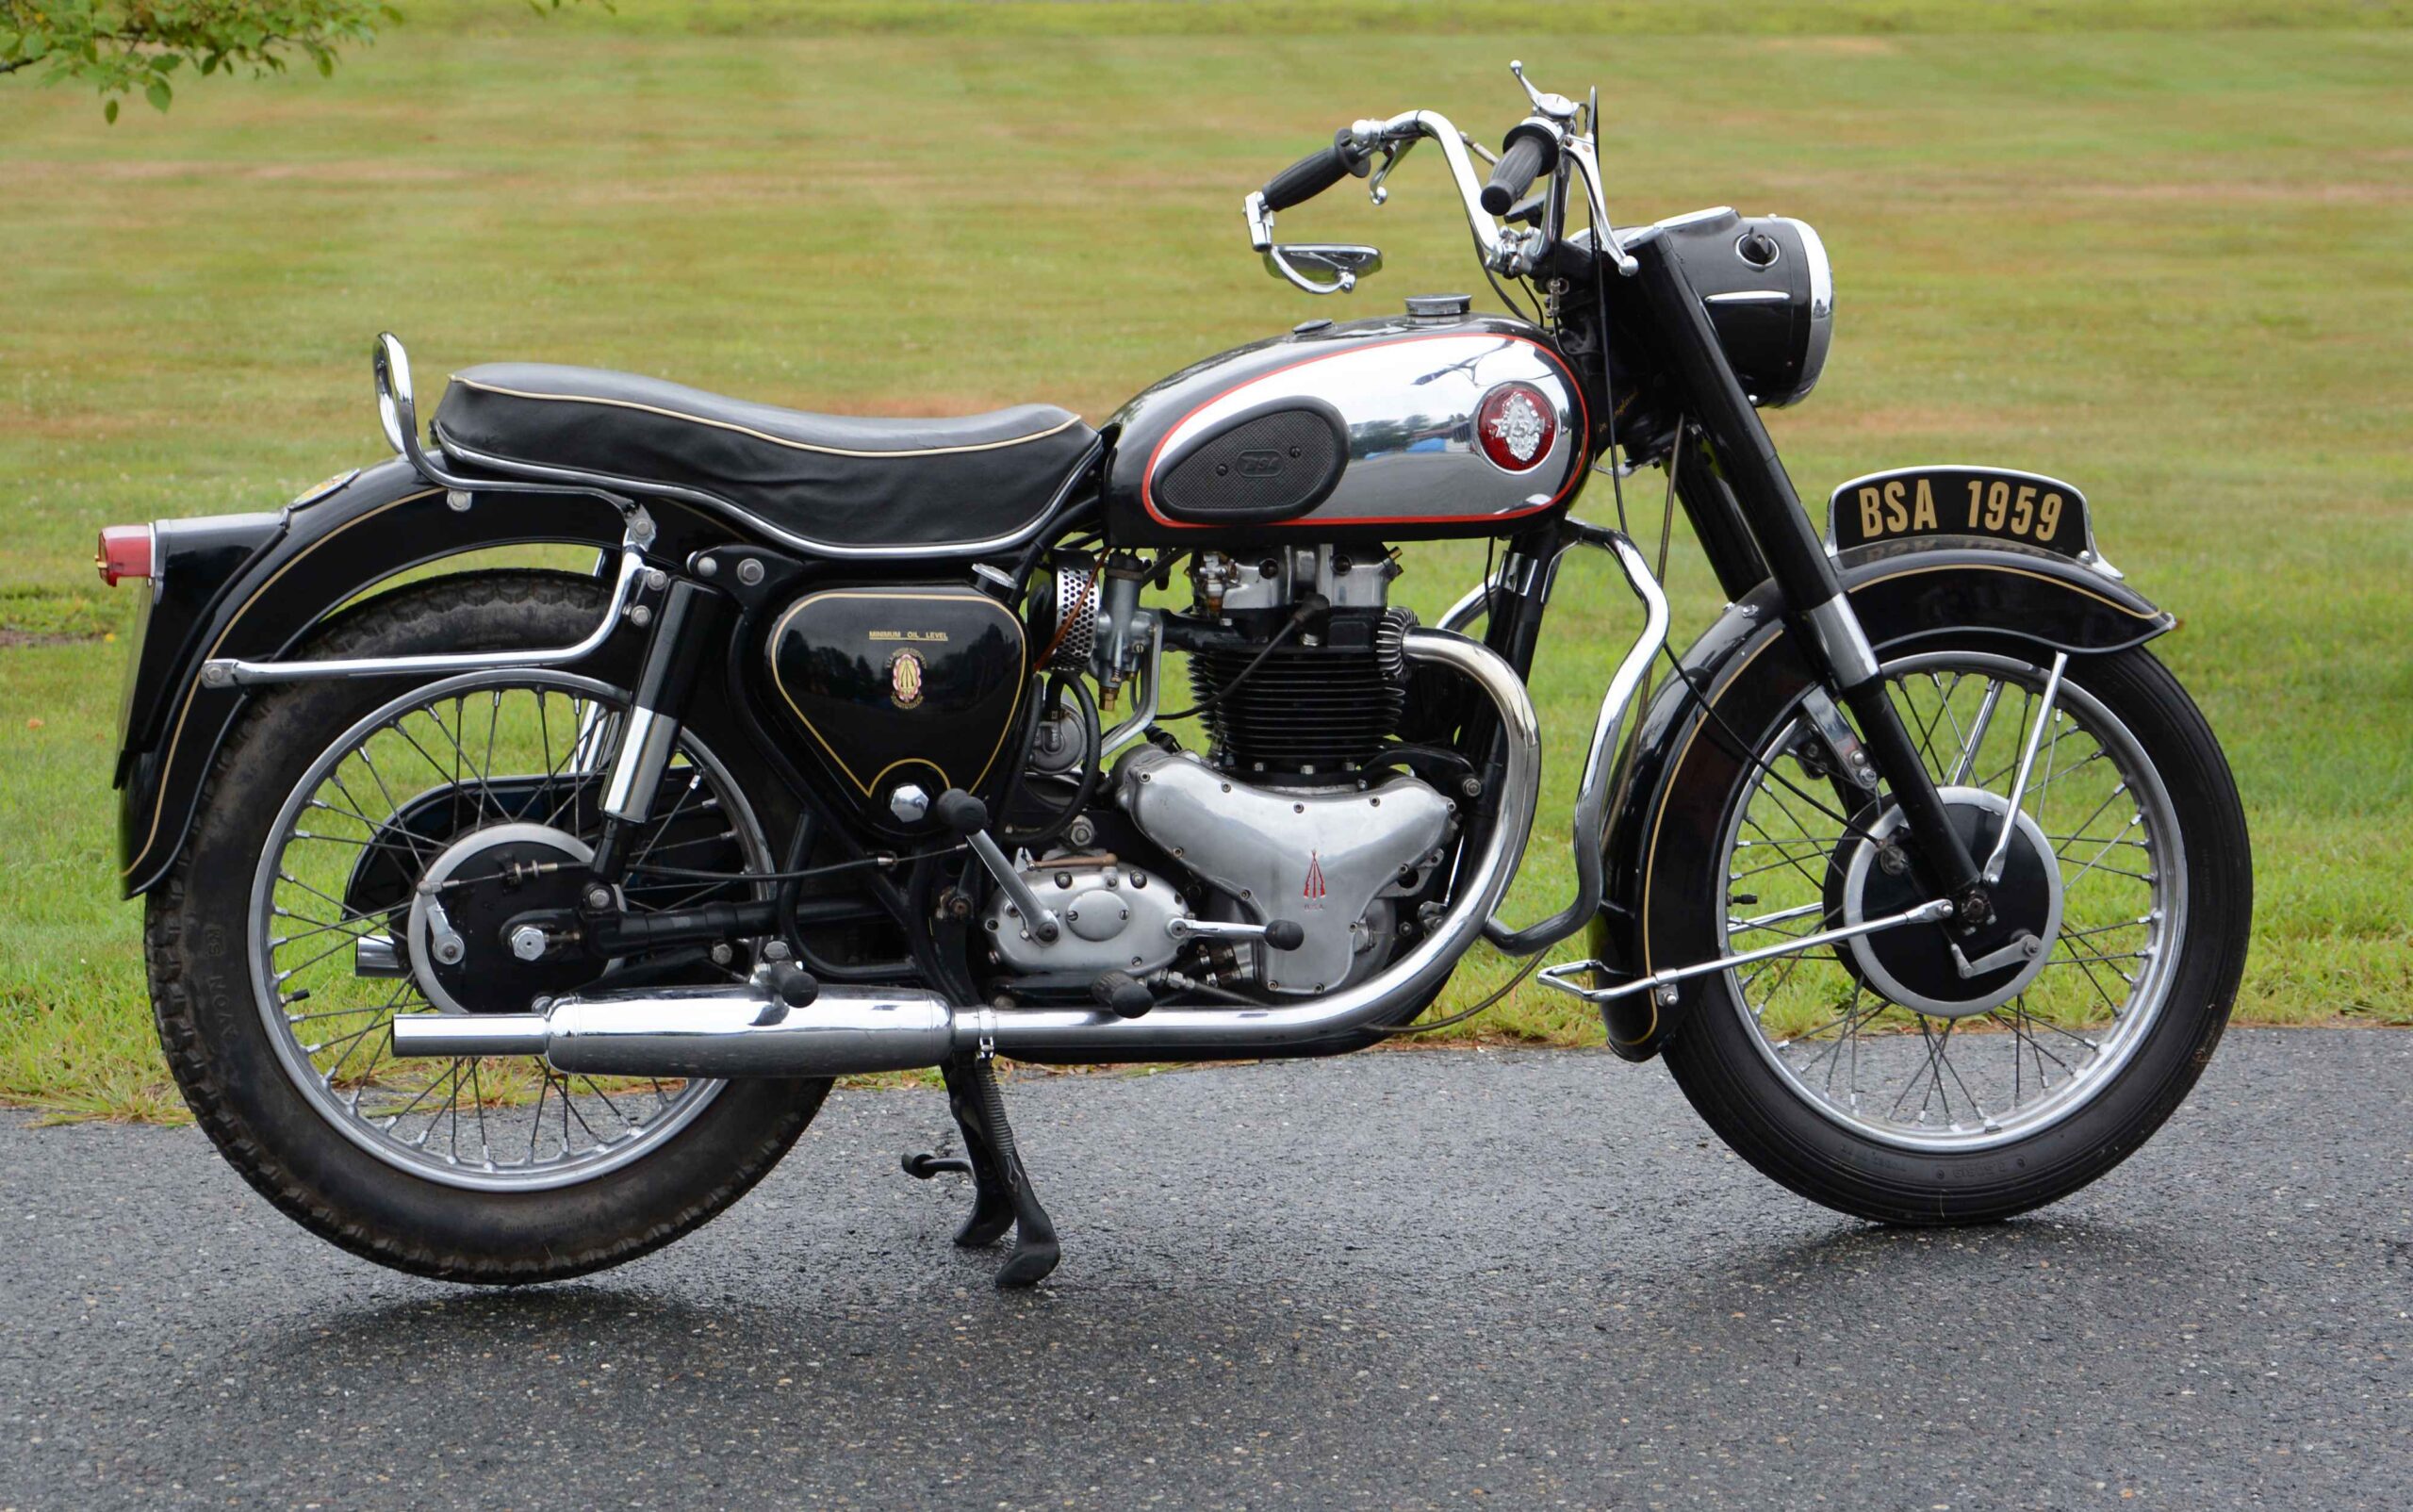 1958 B.S.A. A-10 Golden Flash 650 CC motorcycle